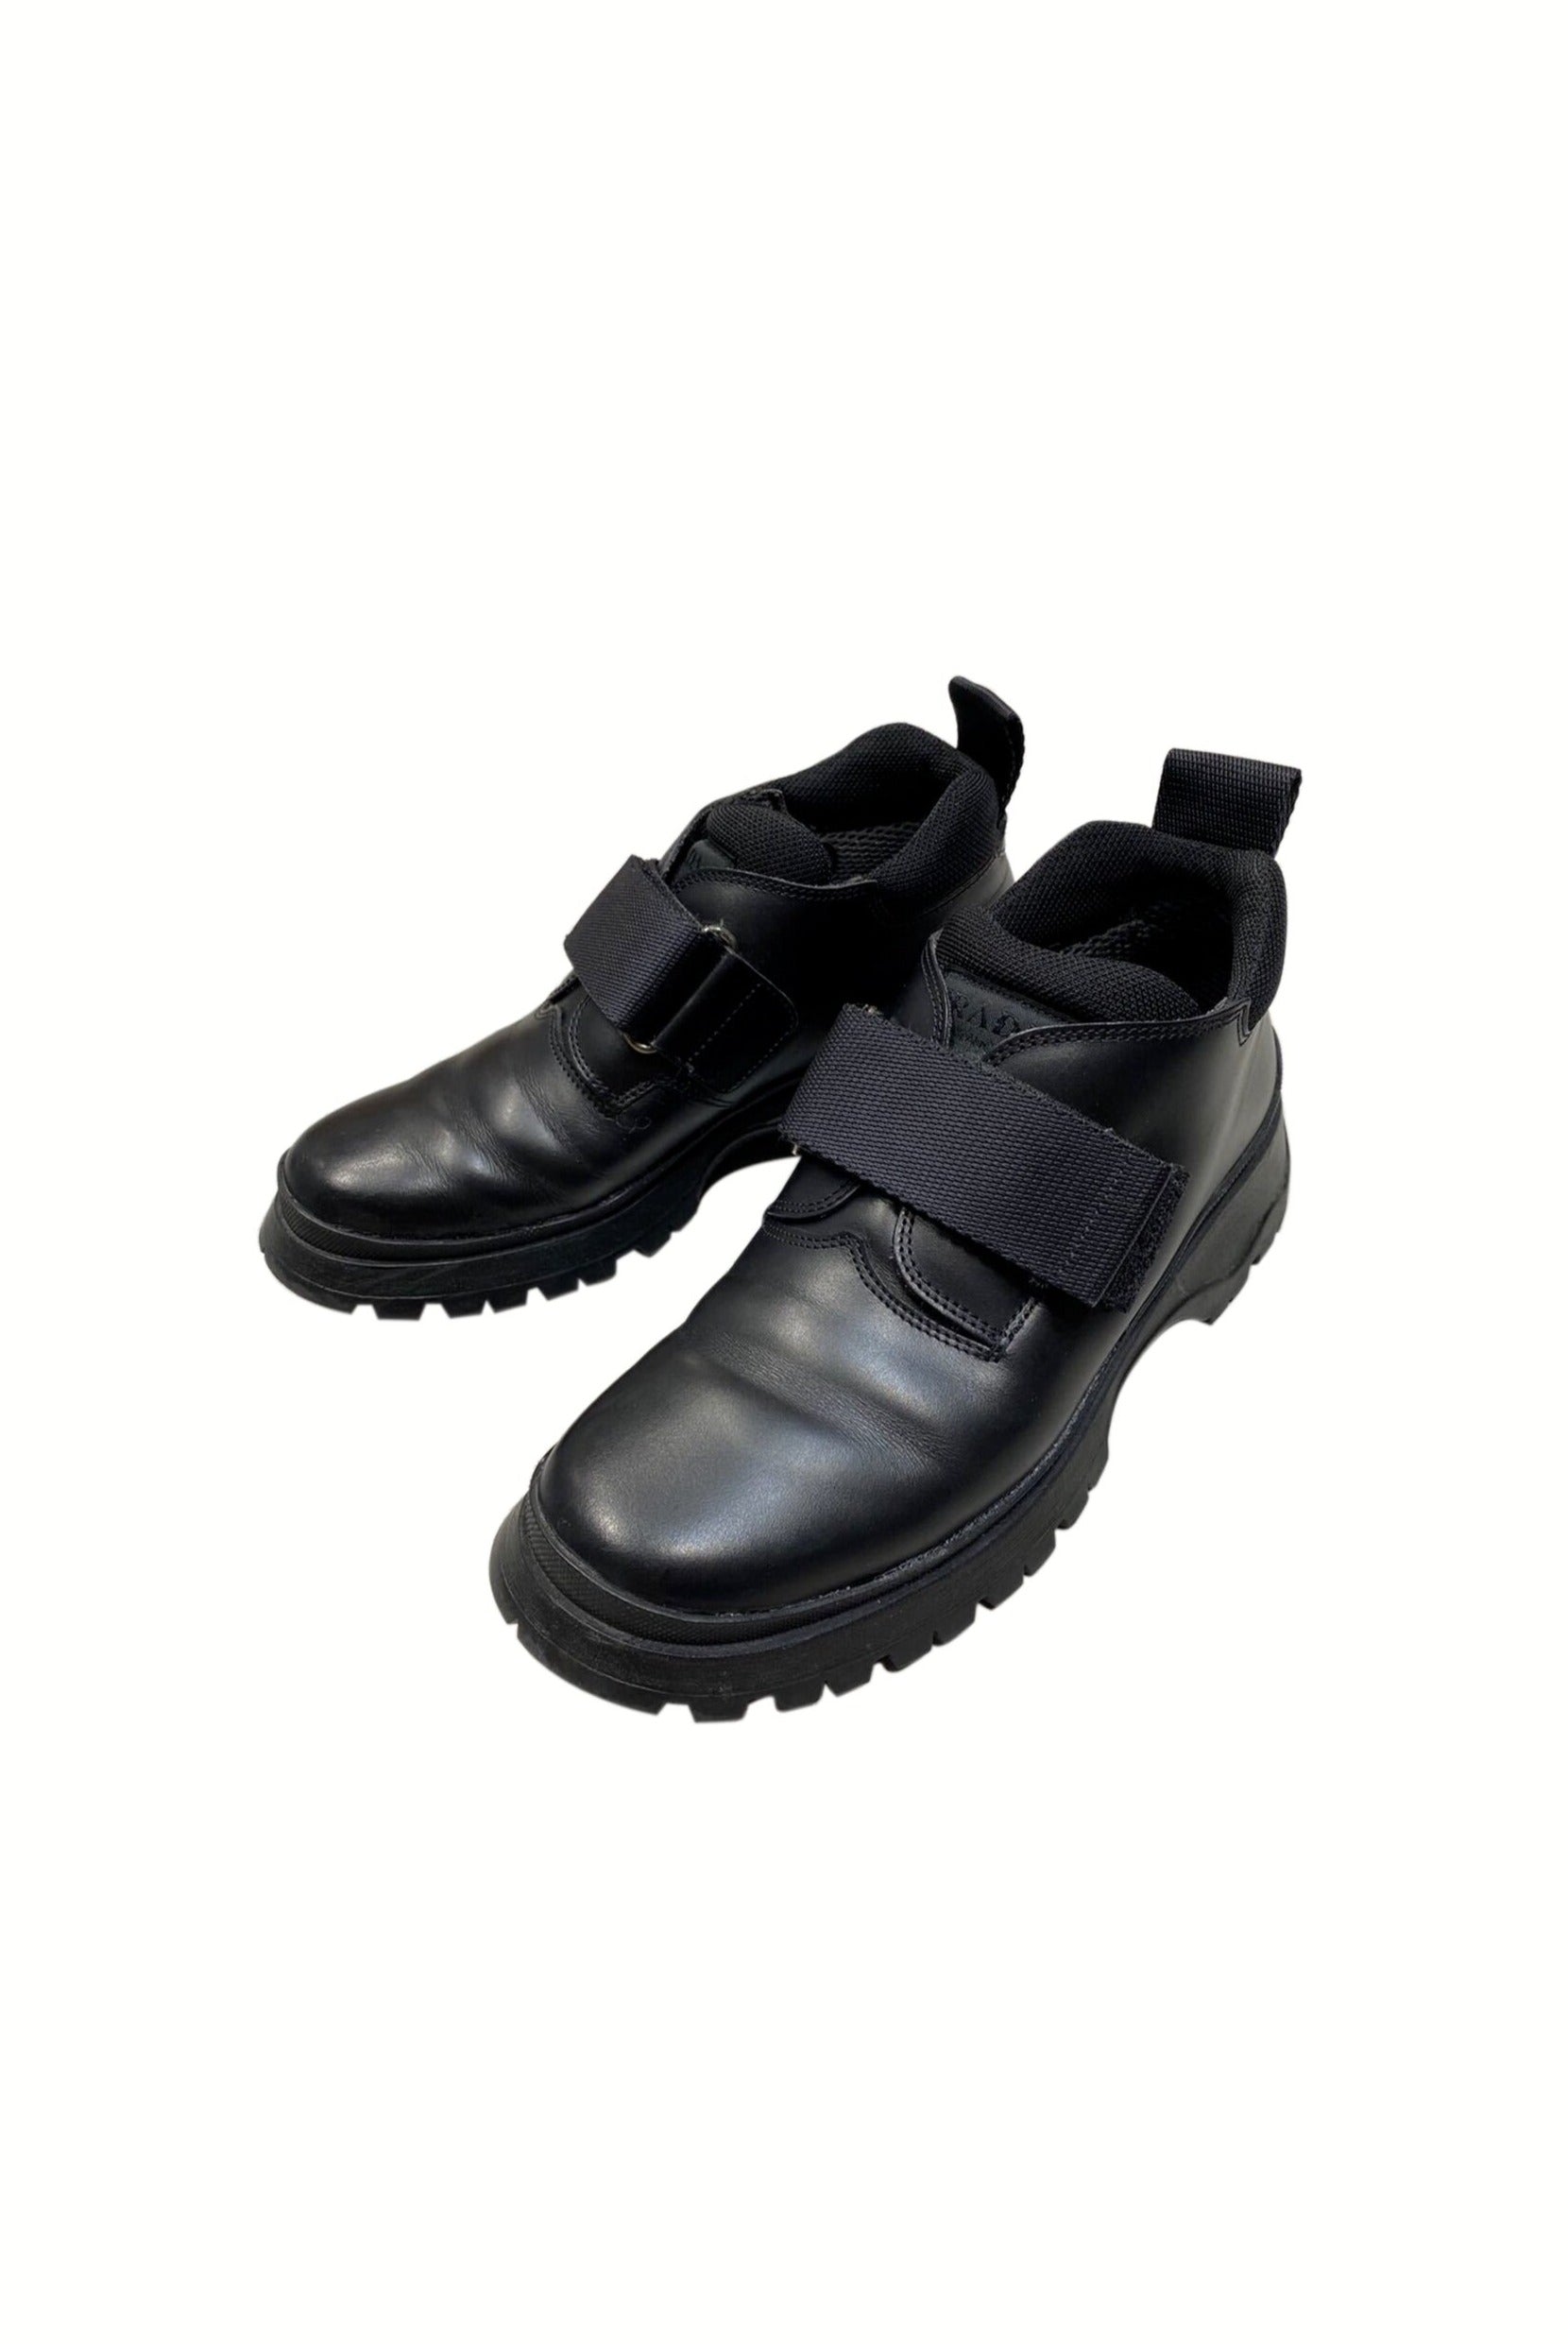 Prada 2000s Black Leather Chunky Shoes